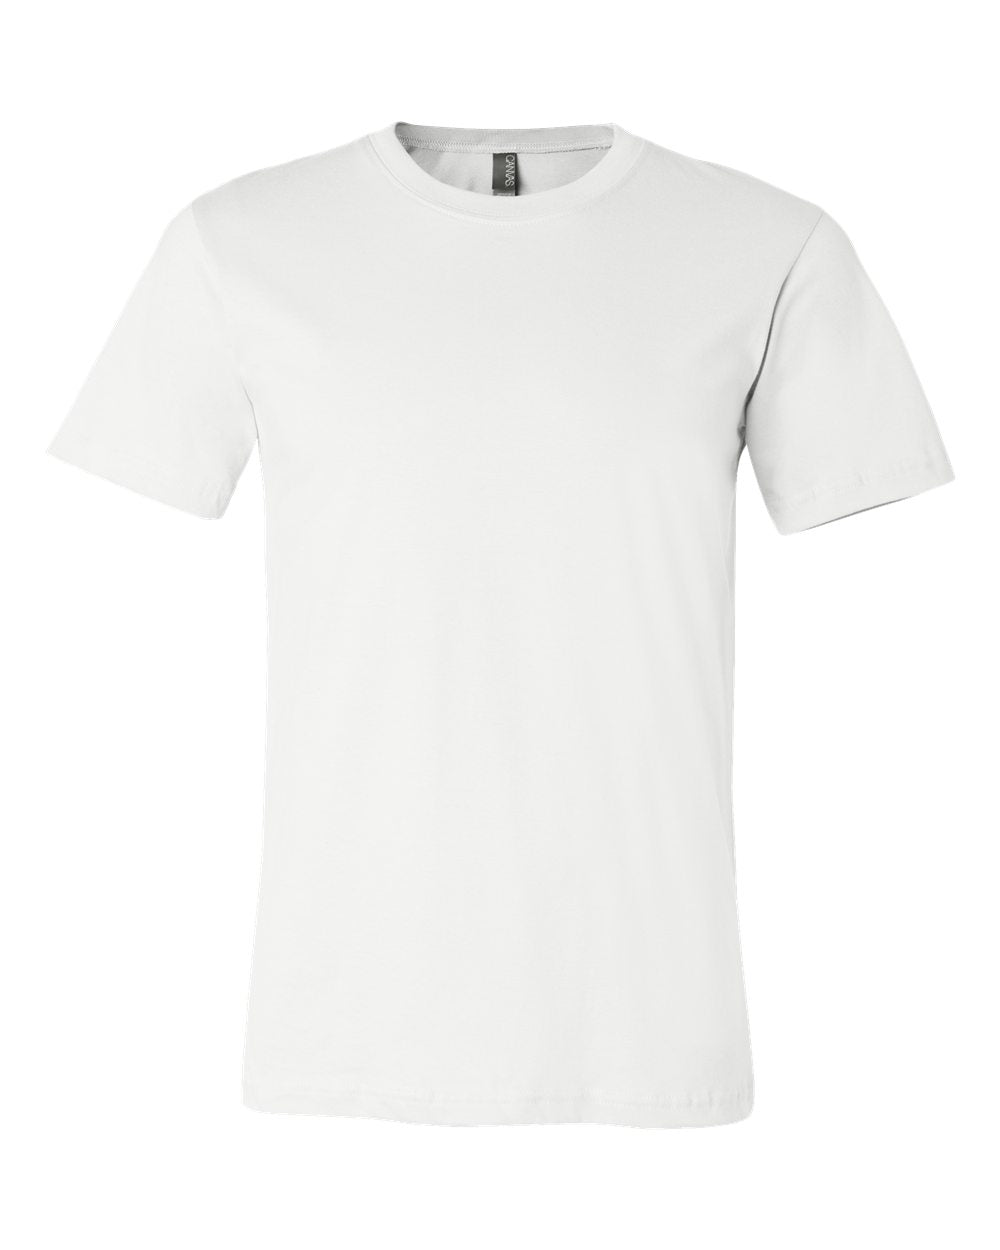 Goshen Football Design 5 t-Shirt